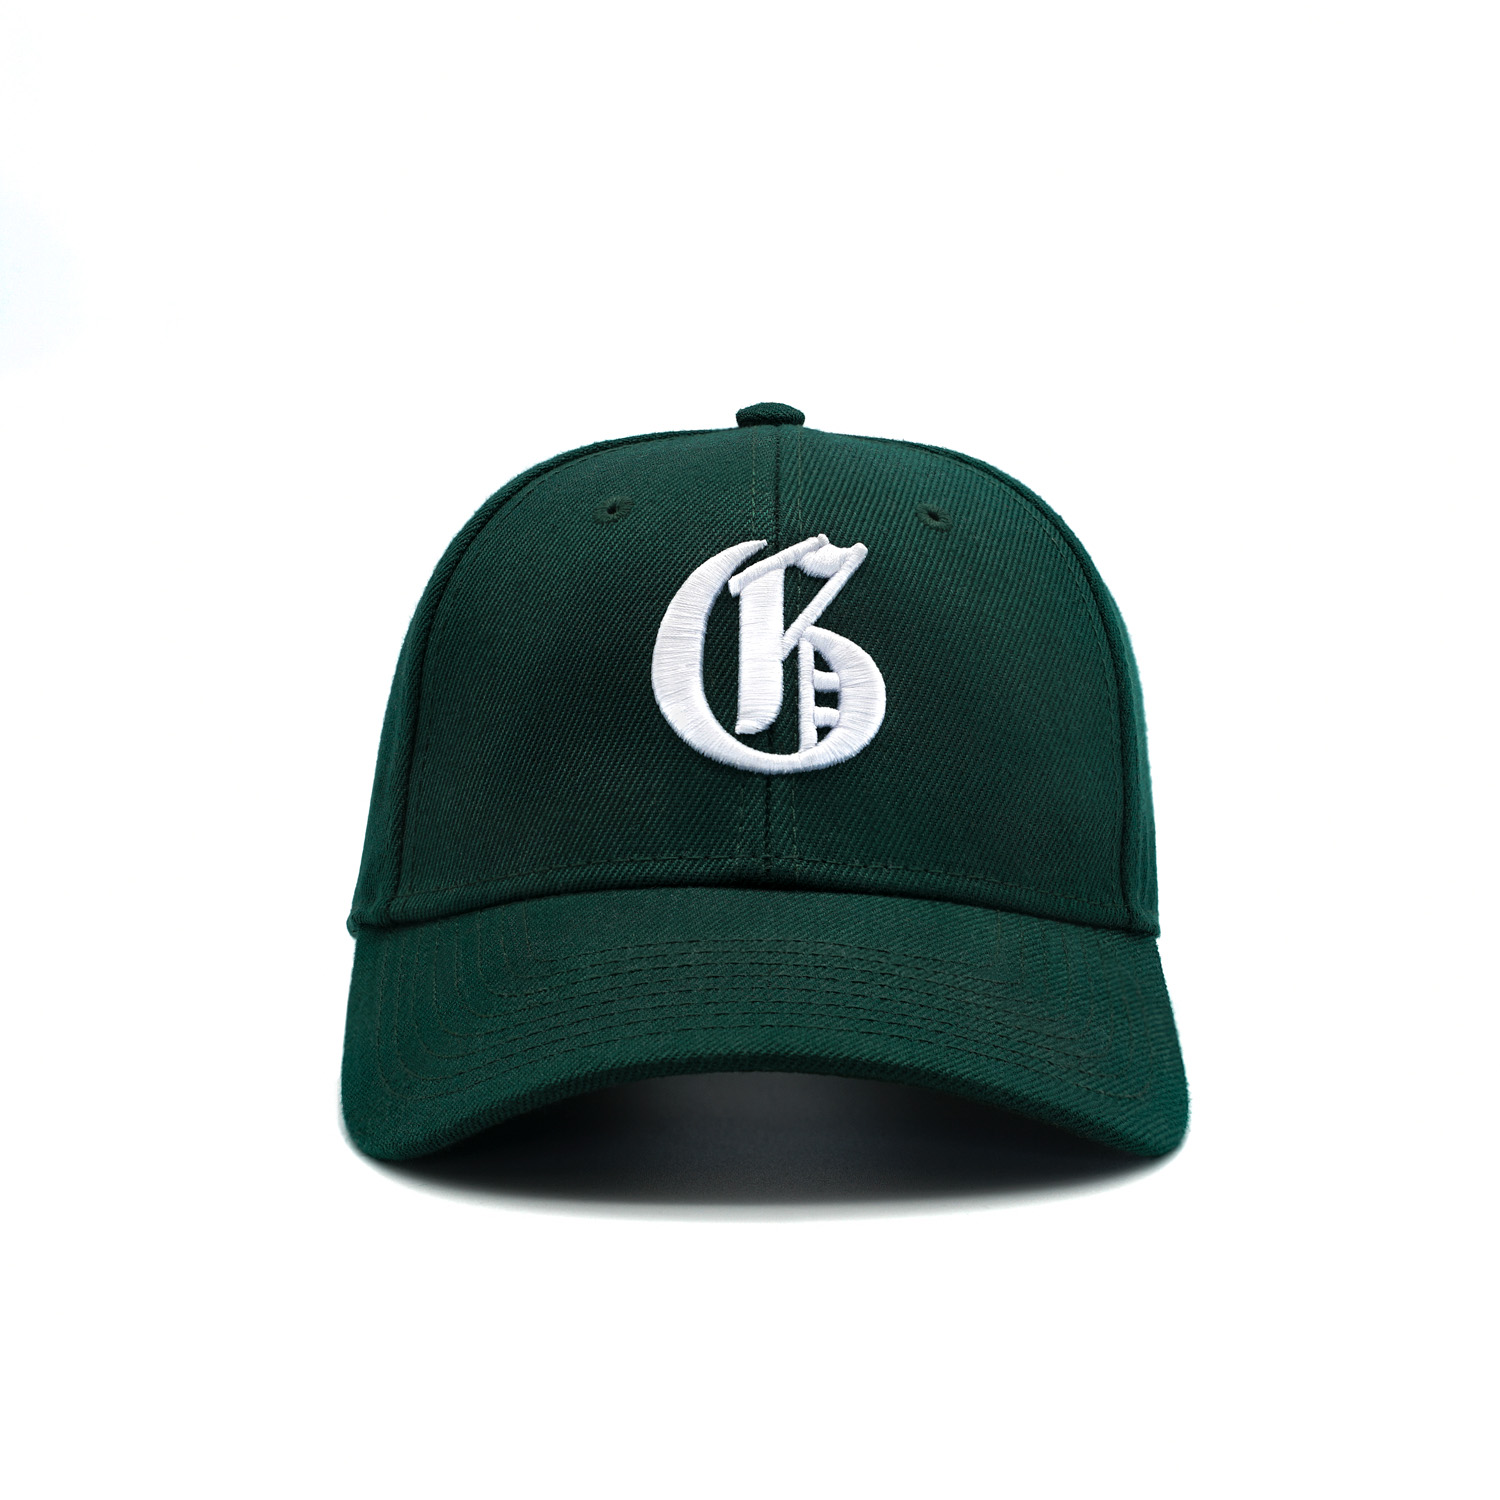 g_logo_full_cap_green_1500x1500_01.1